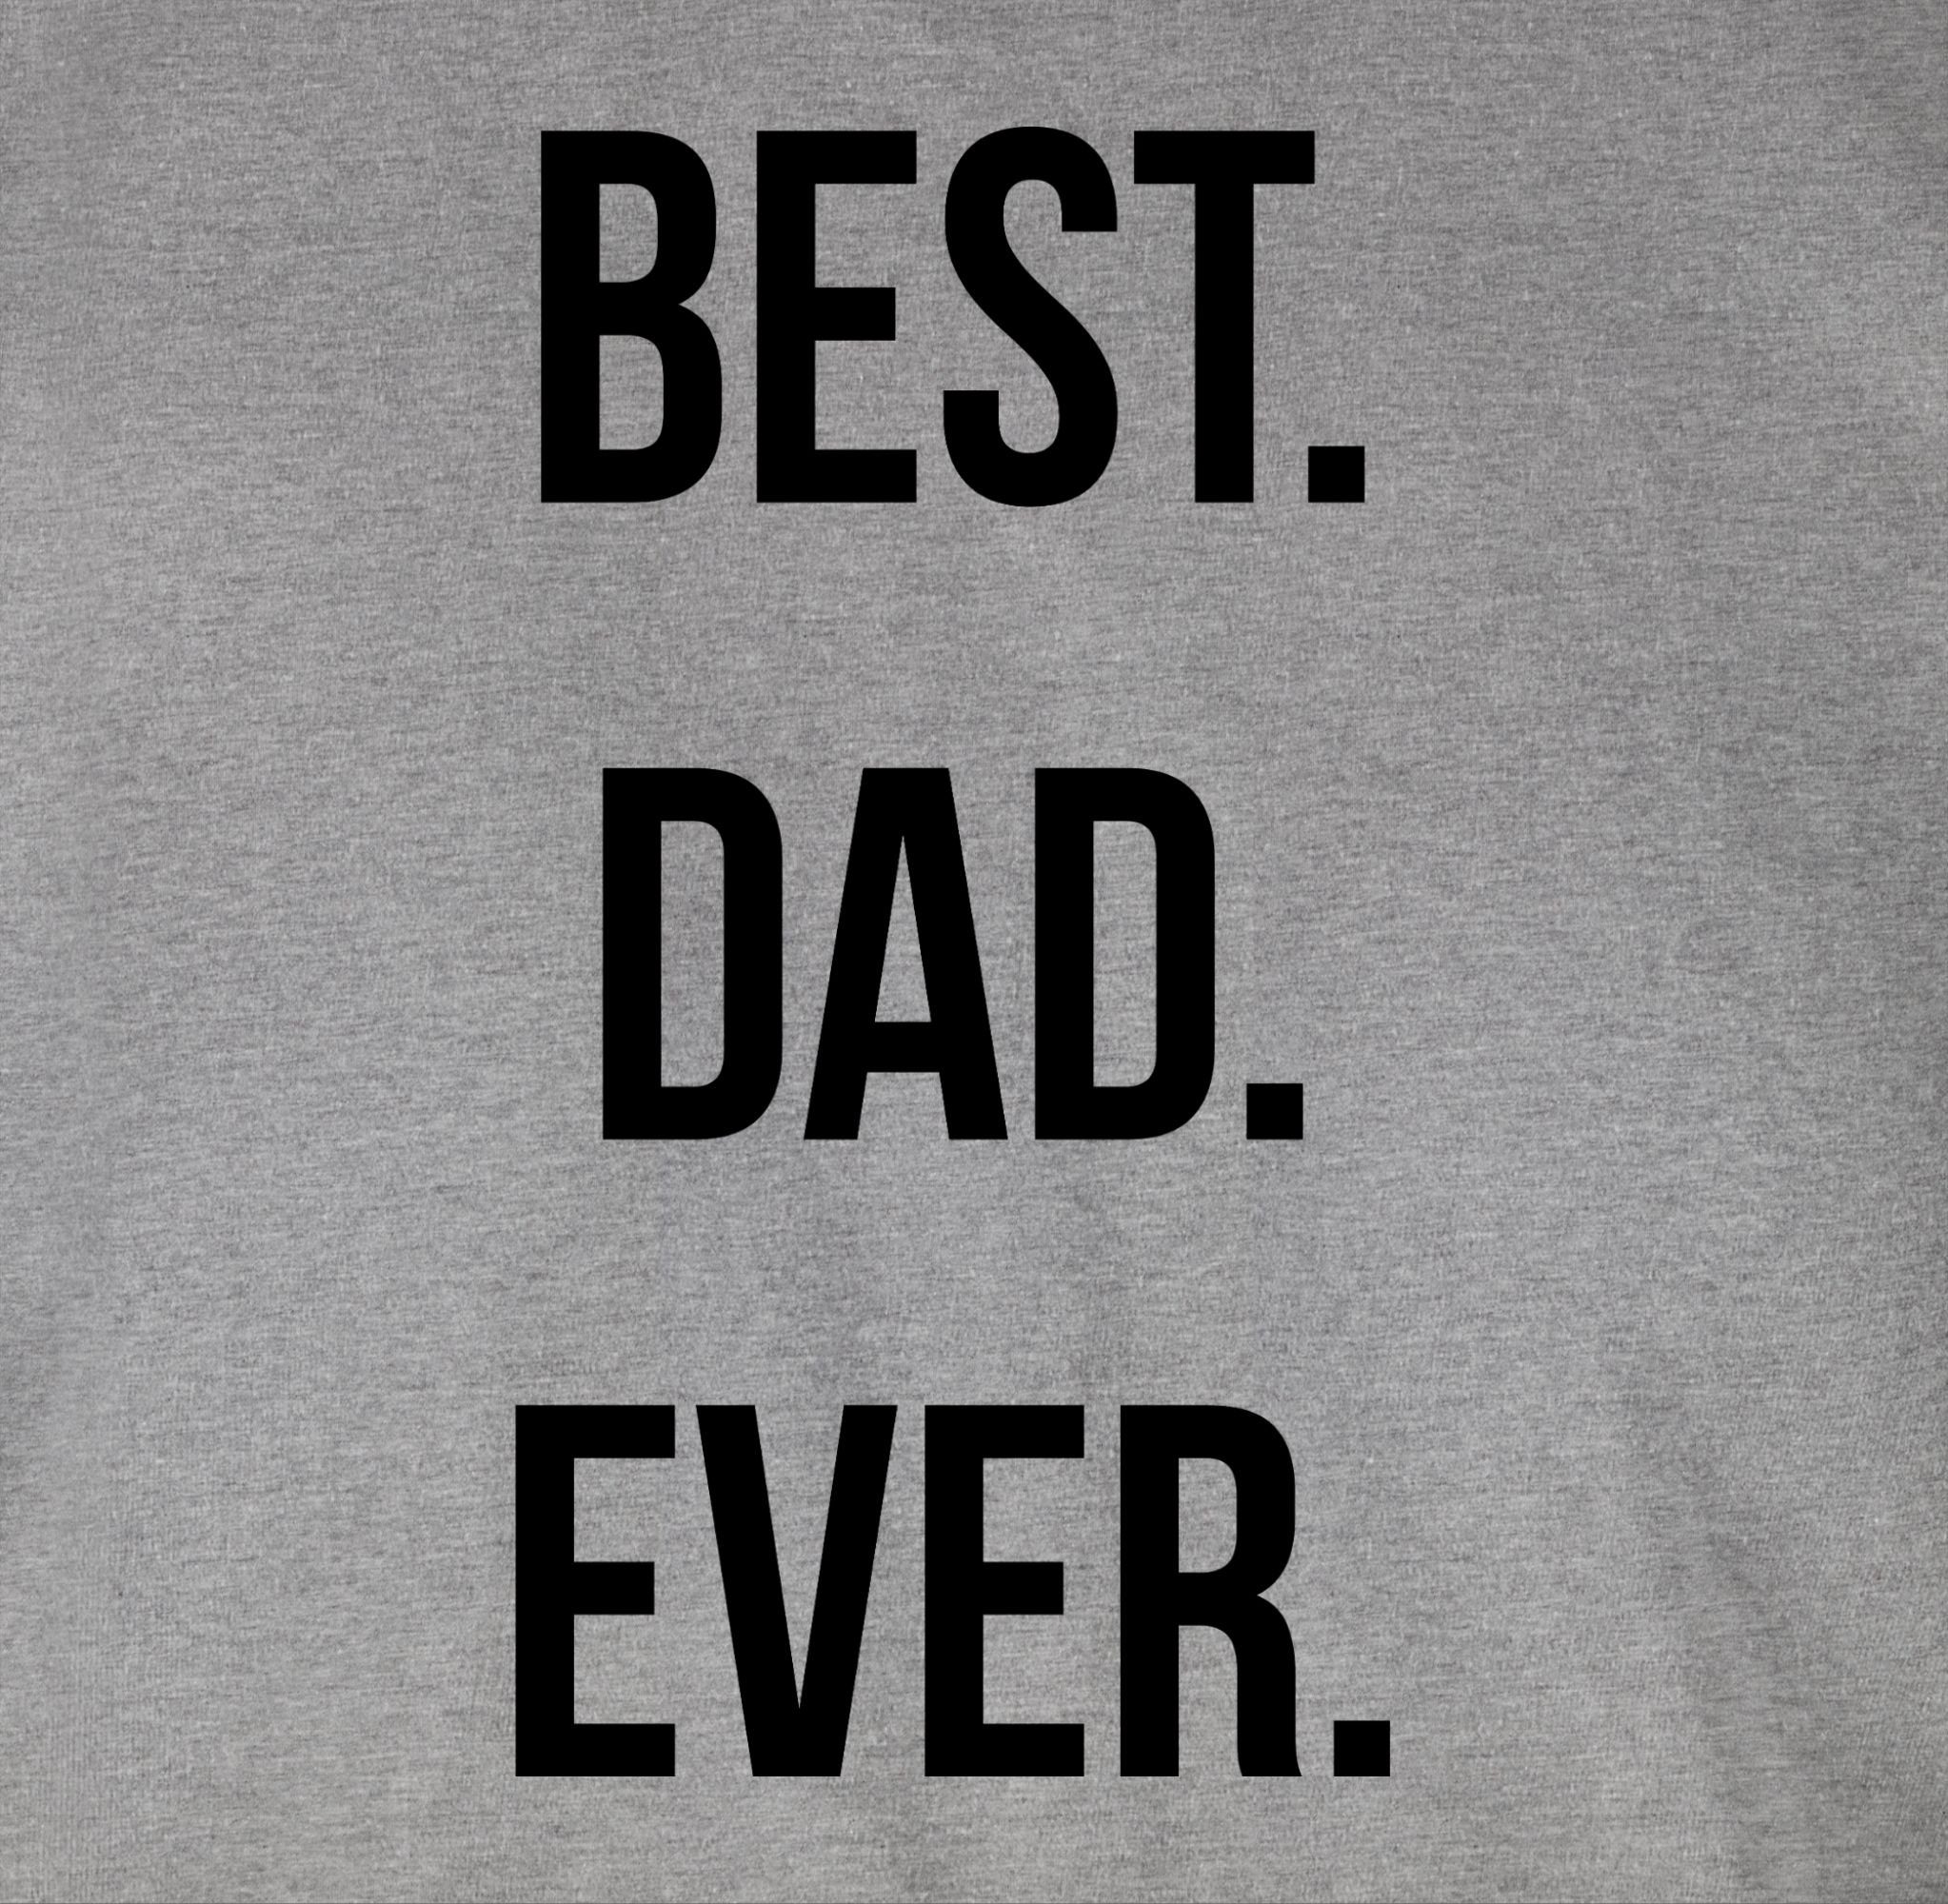 meliert Papa Ever Geschenk 1 Dad Best T-Shirt Shirtracer für Grau Vatertag